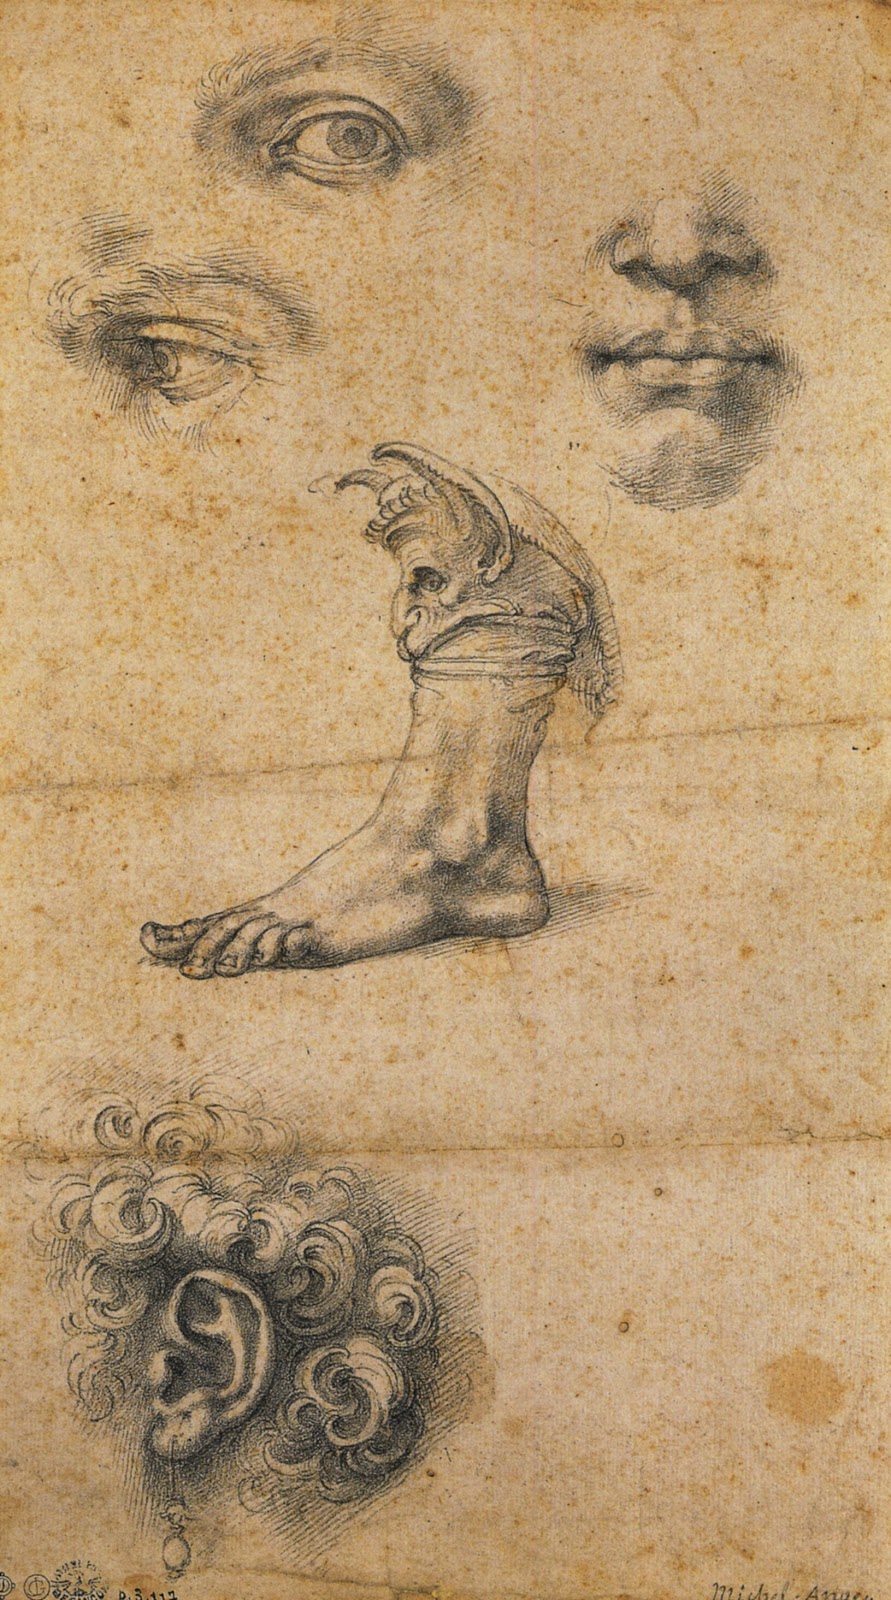 Benvenuto+Cellini-1500-1571 (55).jpg